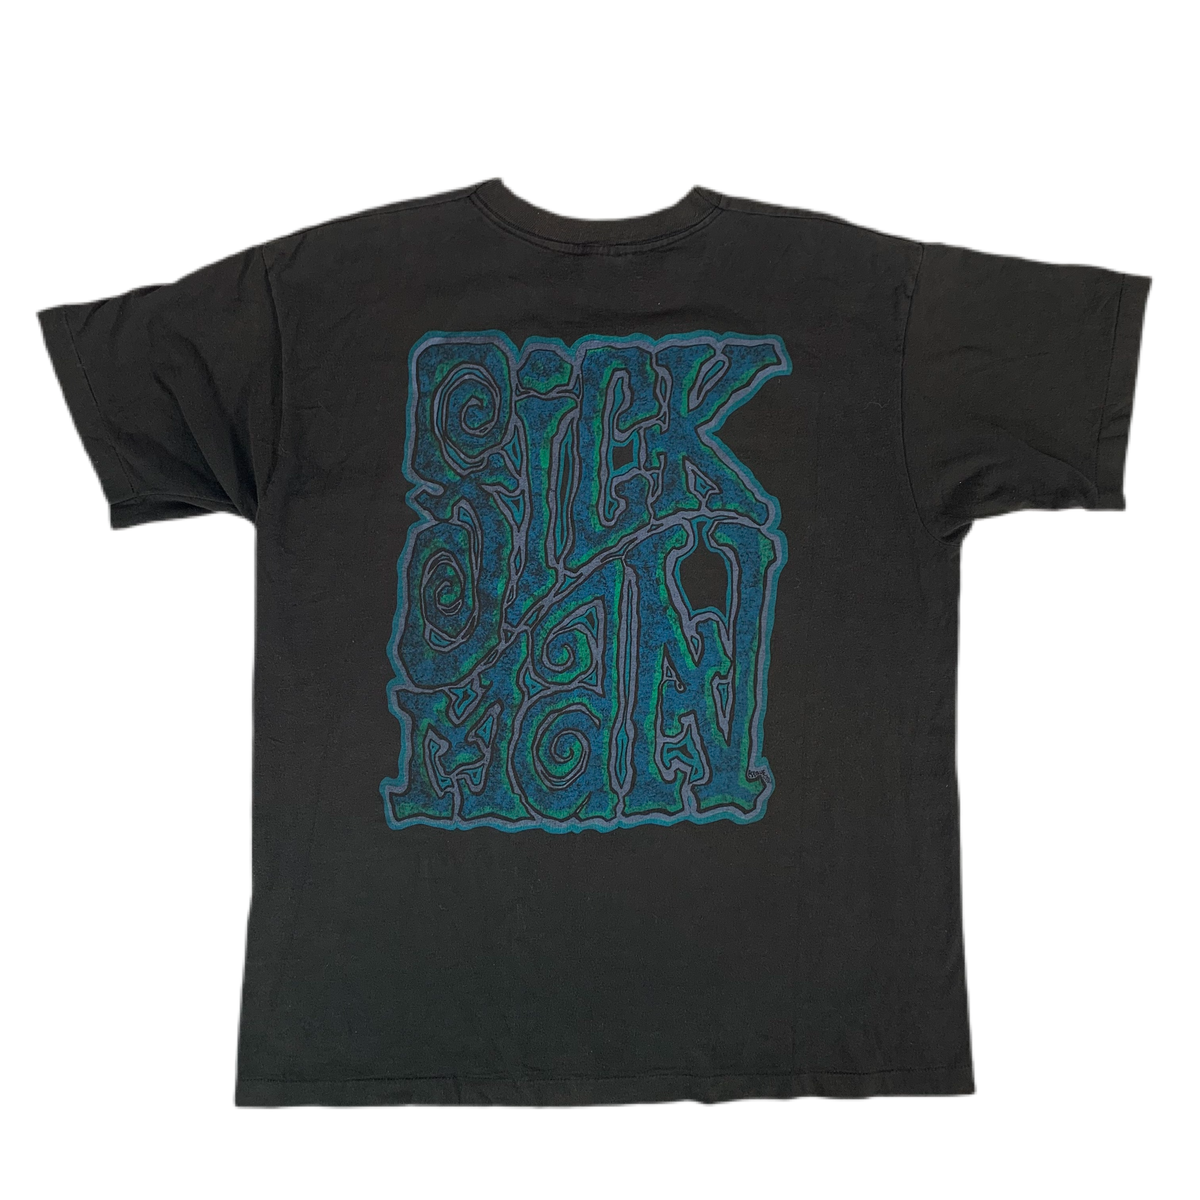 Vintage Alice In Chains &quot;Sickman&quot; T-Shirt